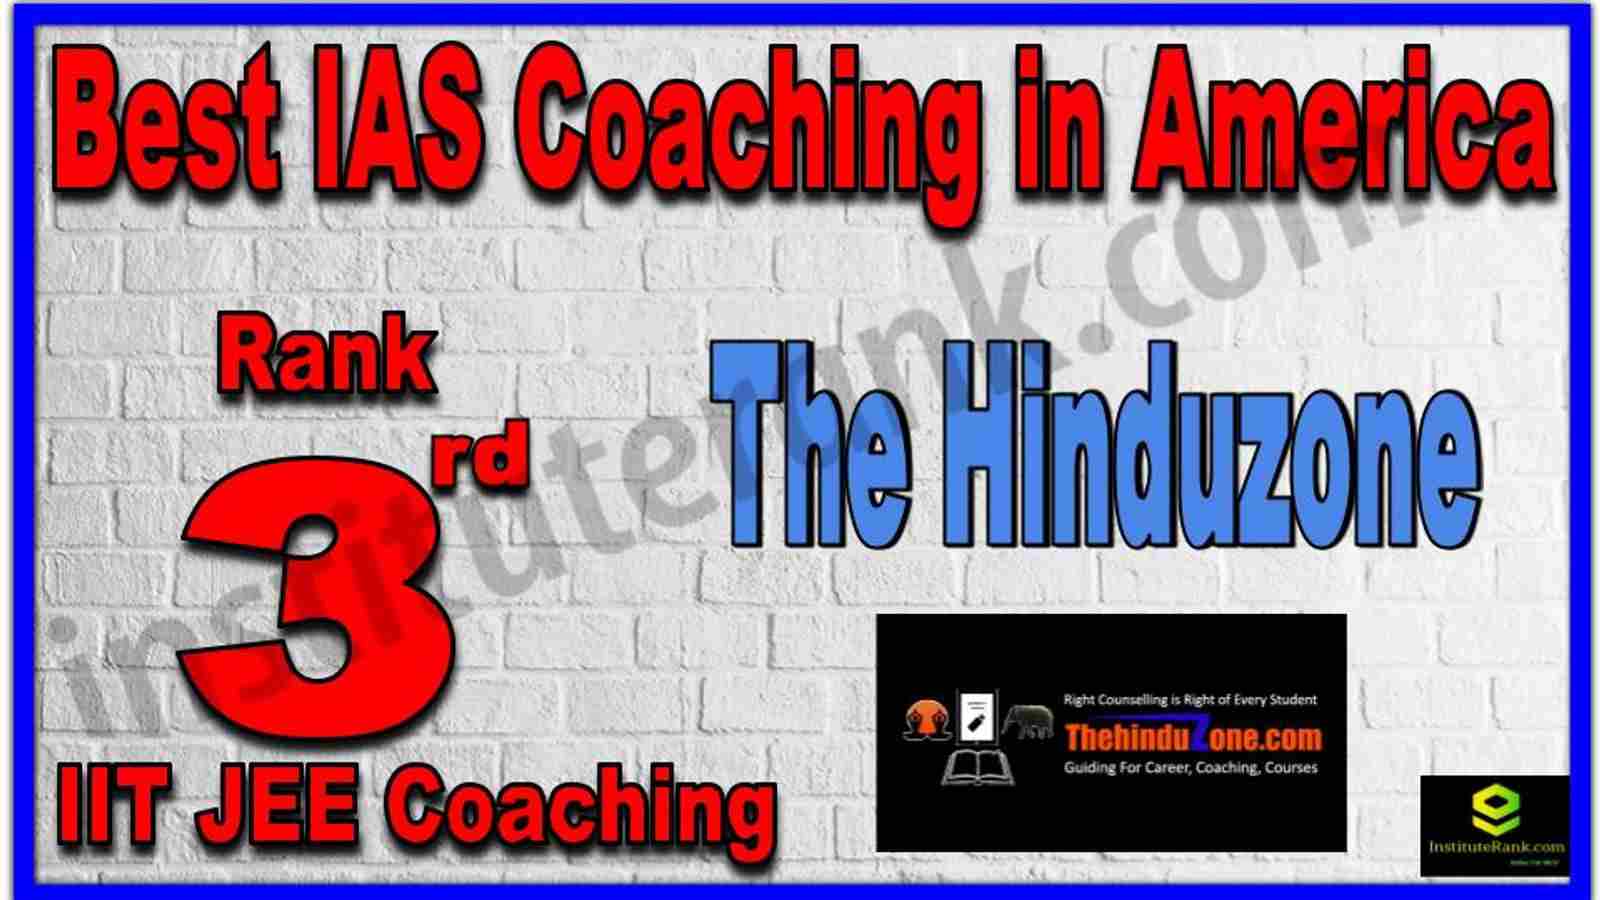 Rank 3rd Best IAS Coaching in America